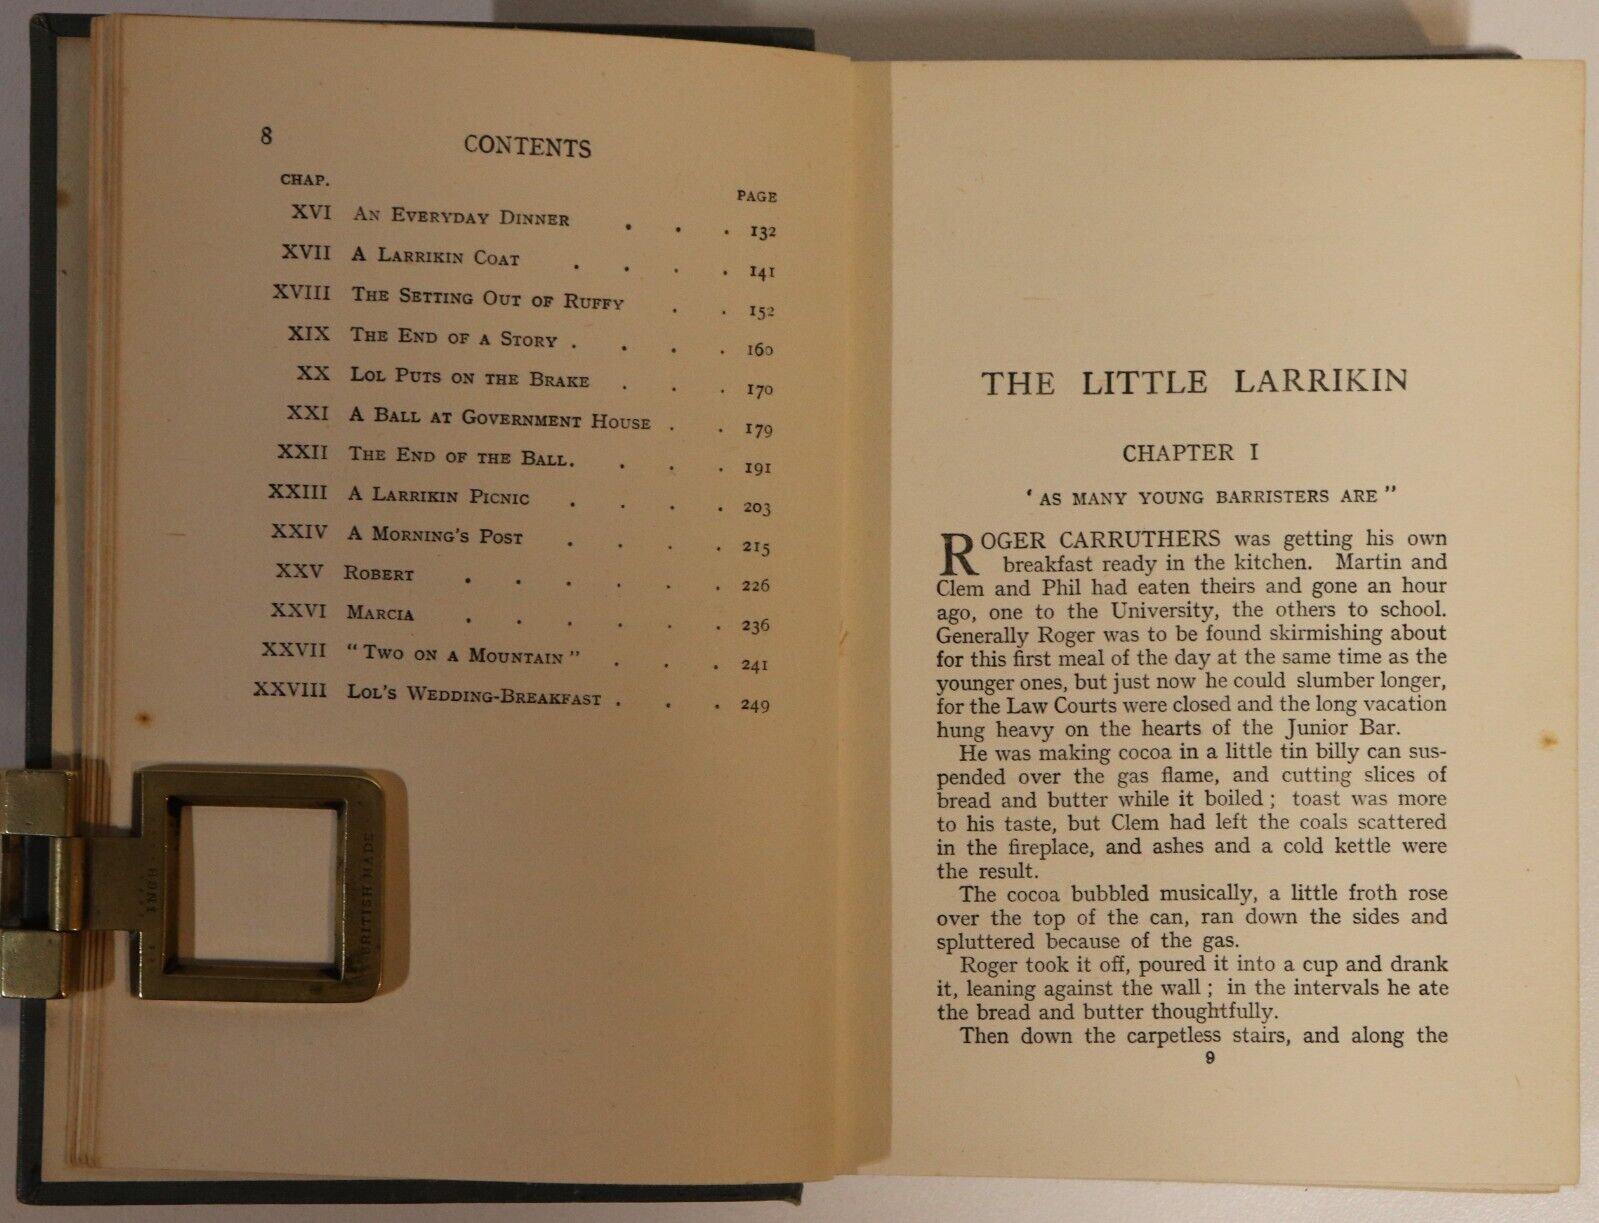 The Little Larrikin by Ethel Turner - c1910 - Antique Australian Fiction Book